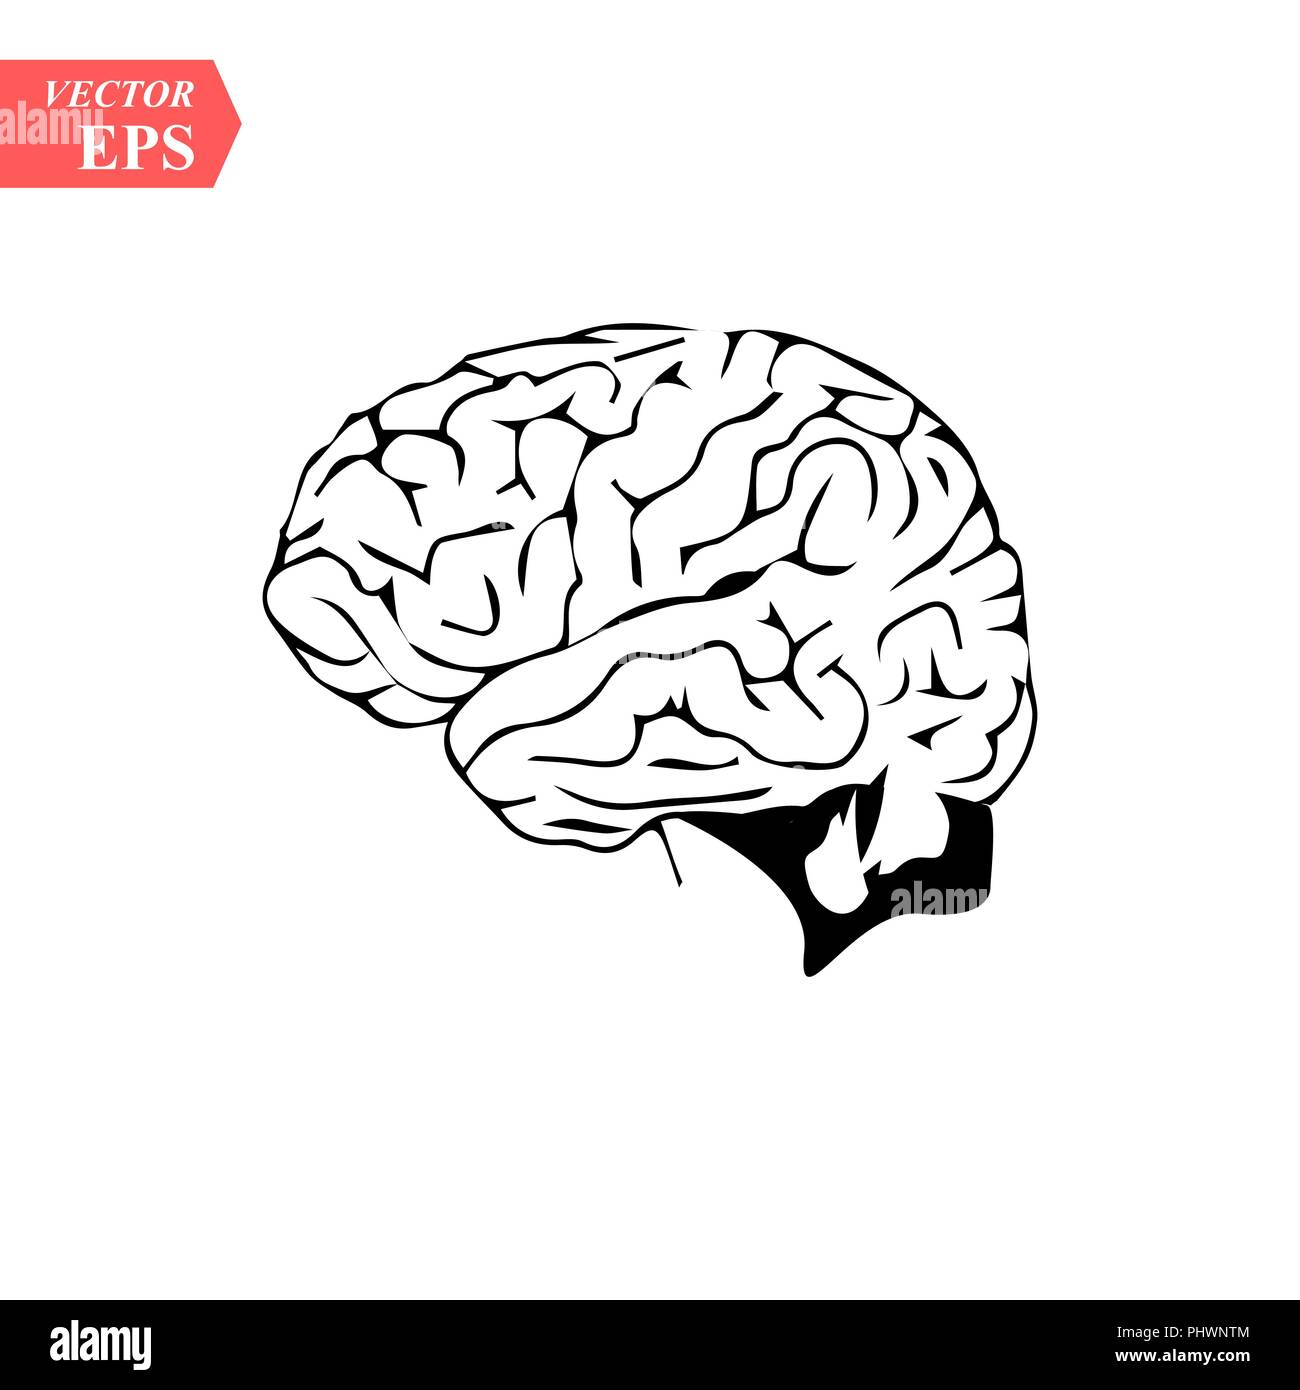 simple brain icon in head